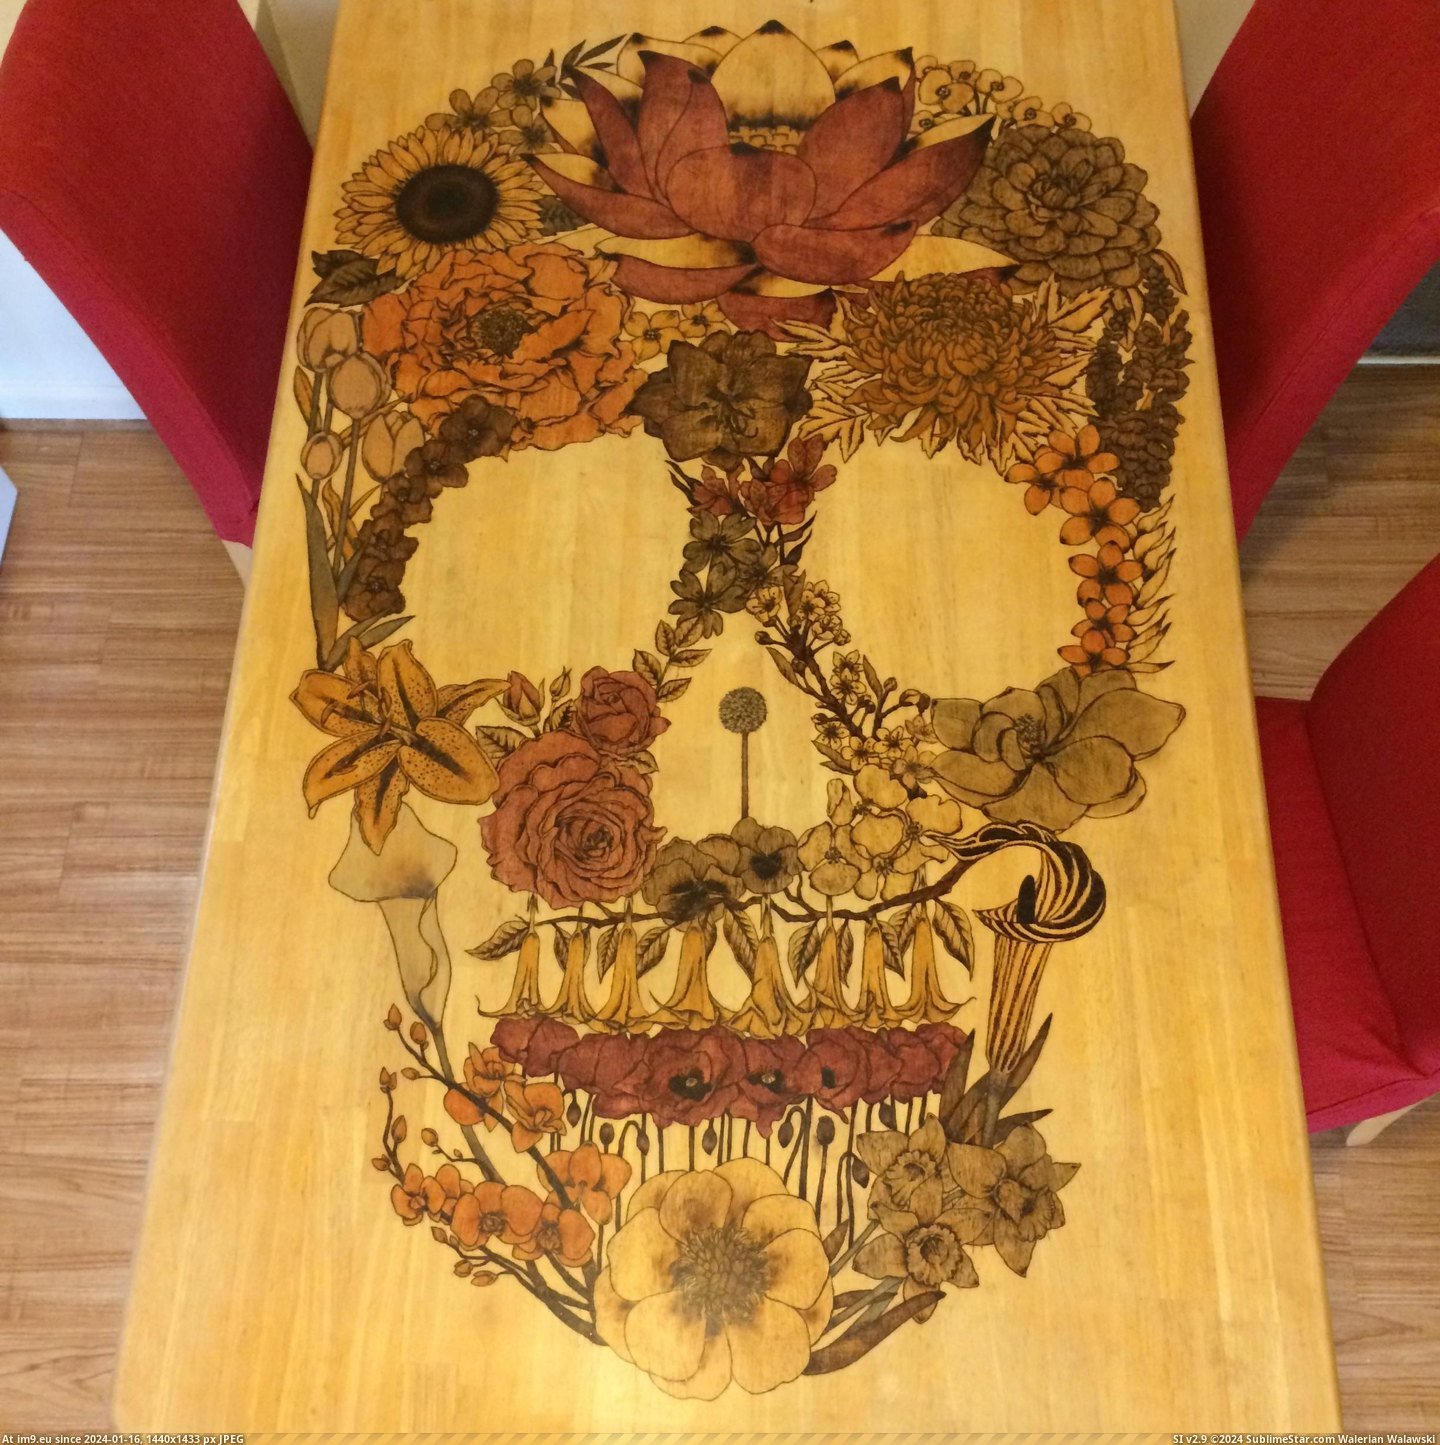 #Kitchen #Skull #Woodburning #Flower [Pics] Flower Skull Woodburning On Kitchen Table Pic. (Bild von album My r/PICS favs))